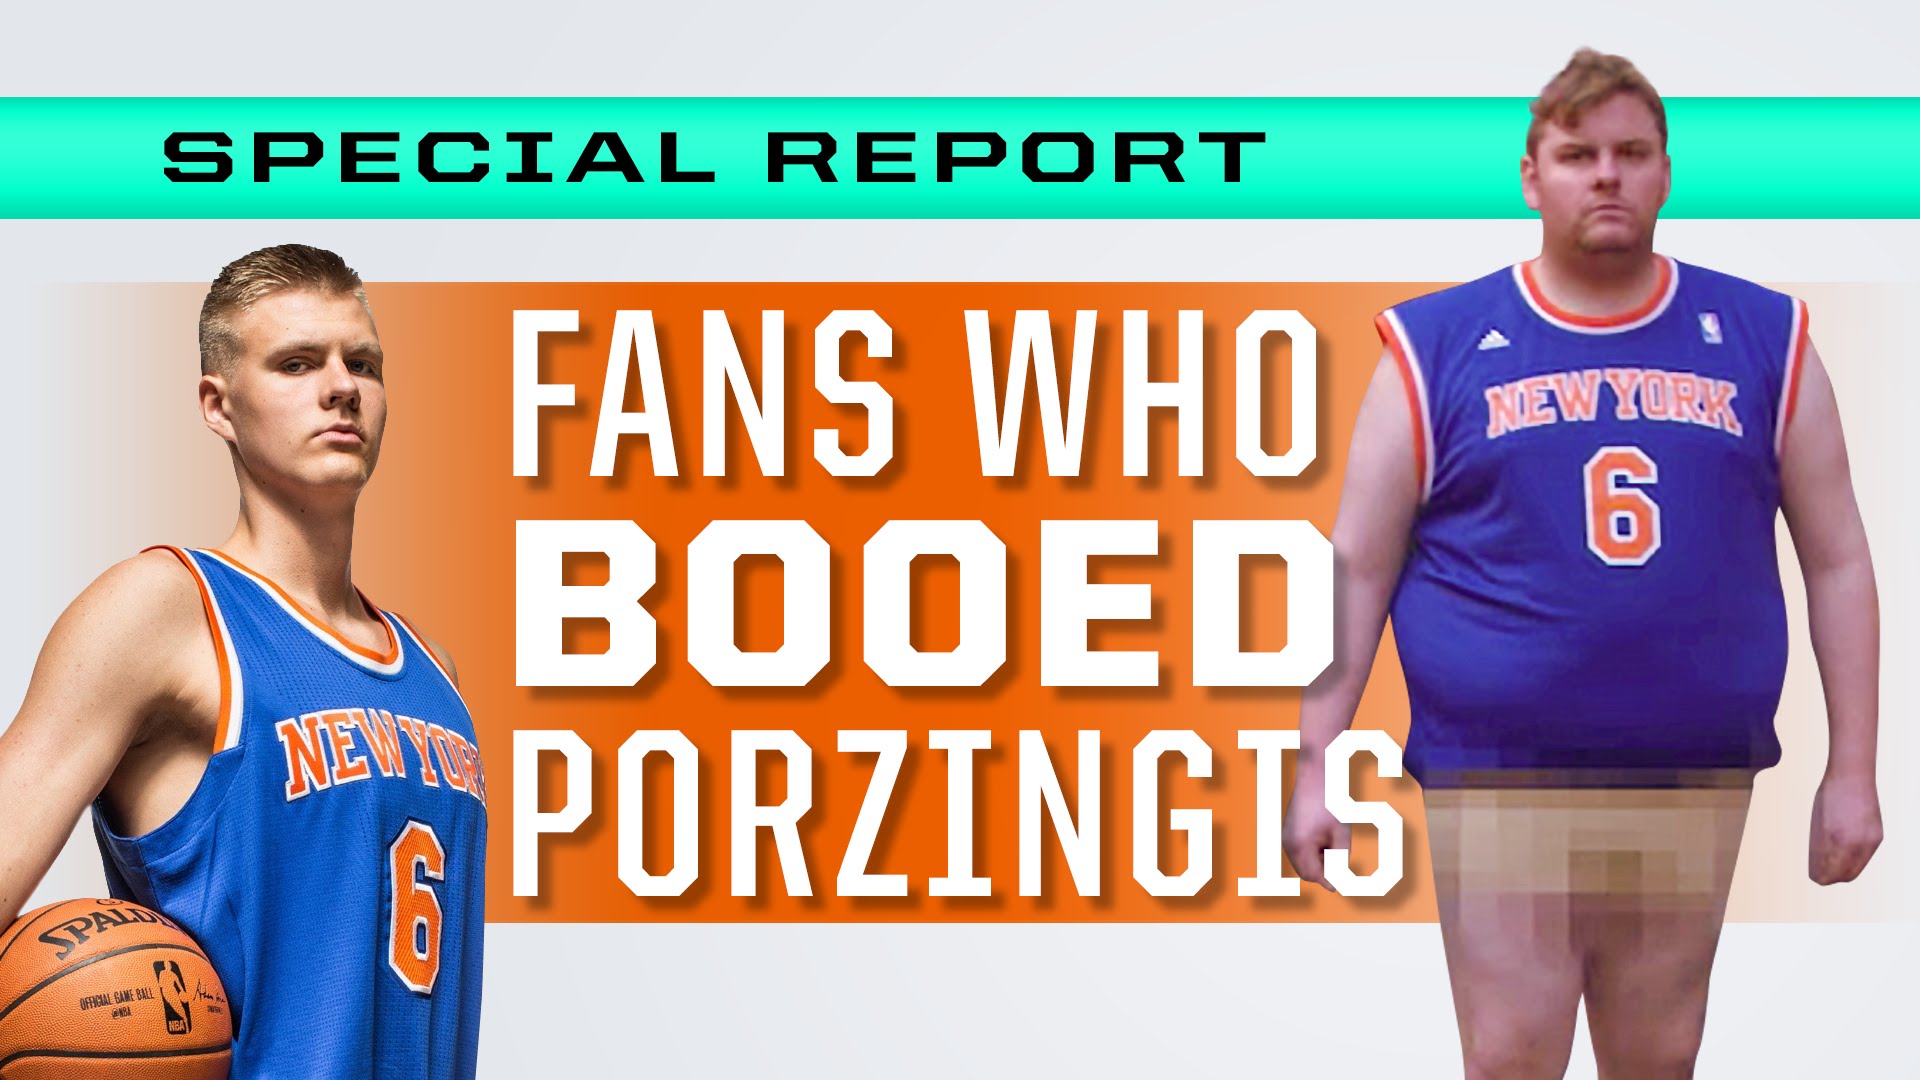 Hilarious: Spoof of fans who booed Kristaps Porzinigis